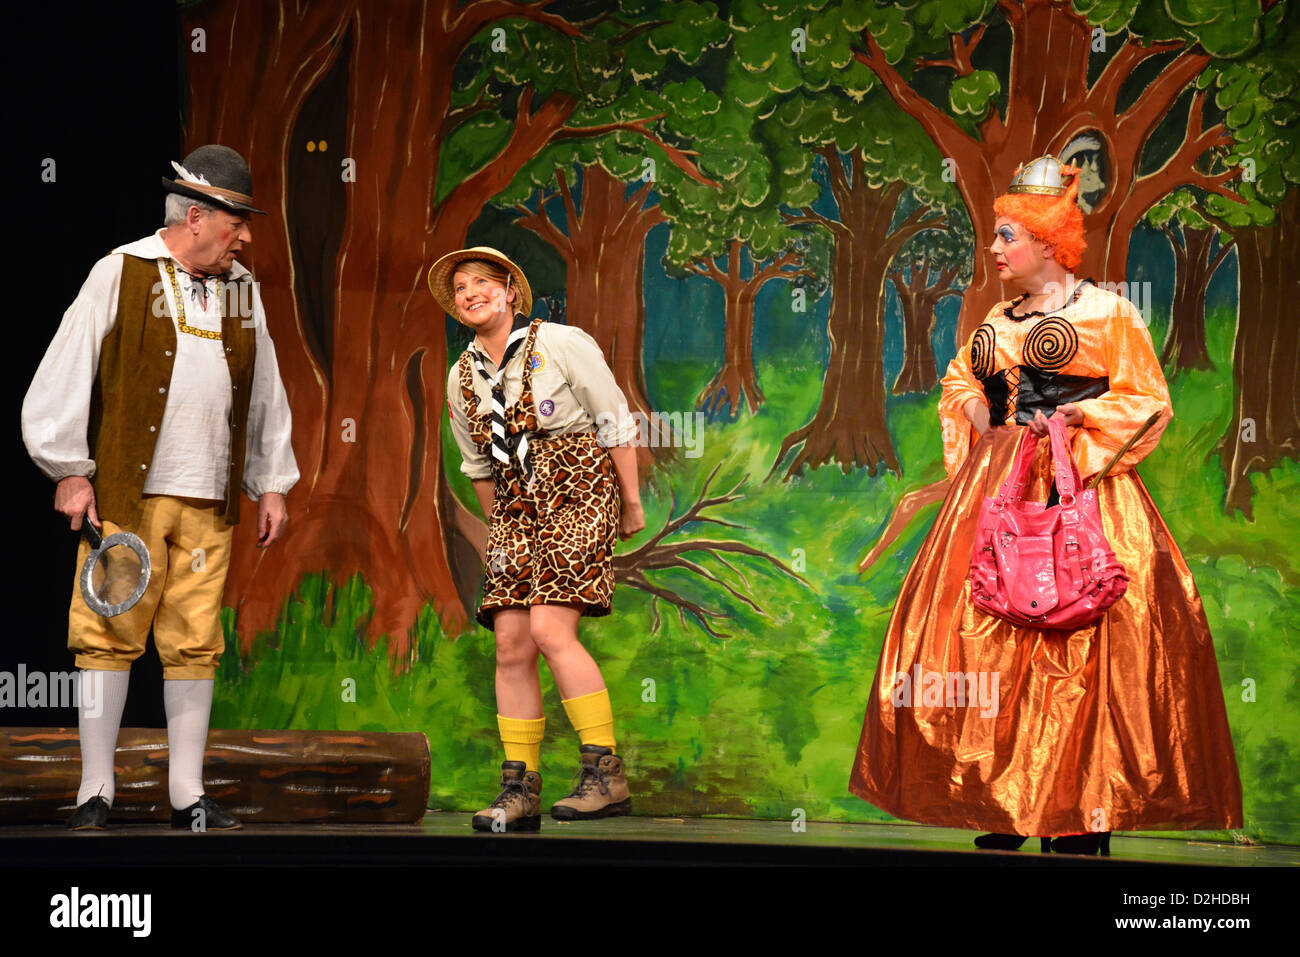 Dame, Bruno & village idiot in 'Hansel & Gretel' amateur pantomime production, Hounslow, Greater London, England, United Kingdom Stock Photo